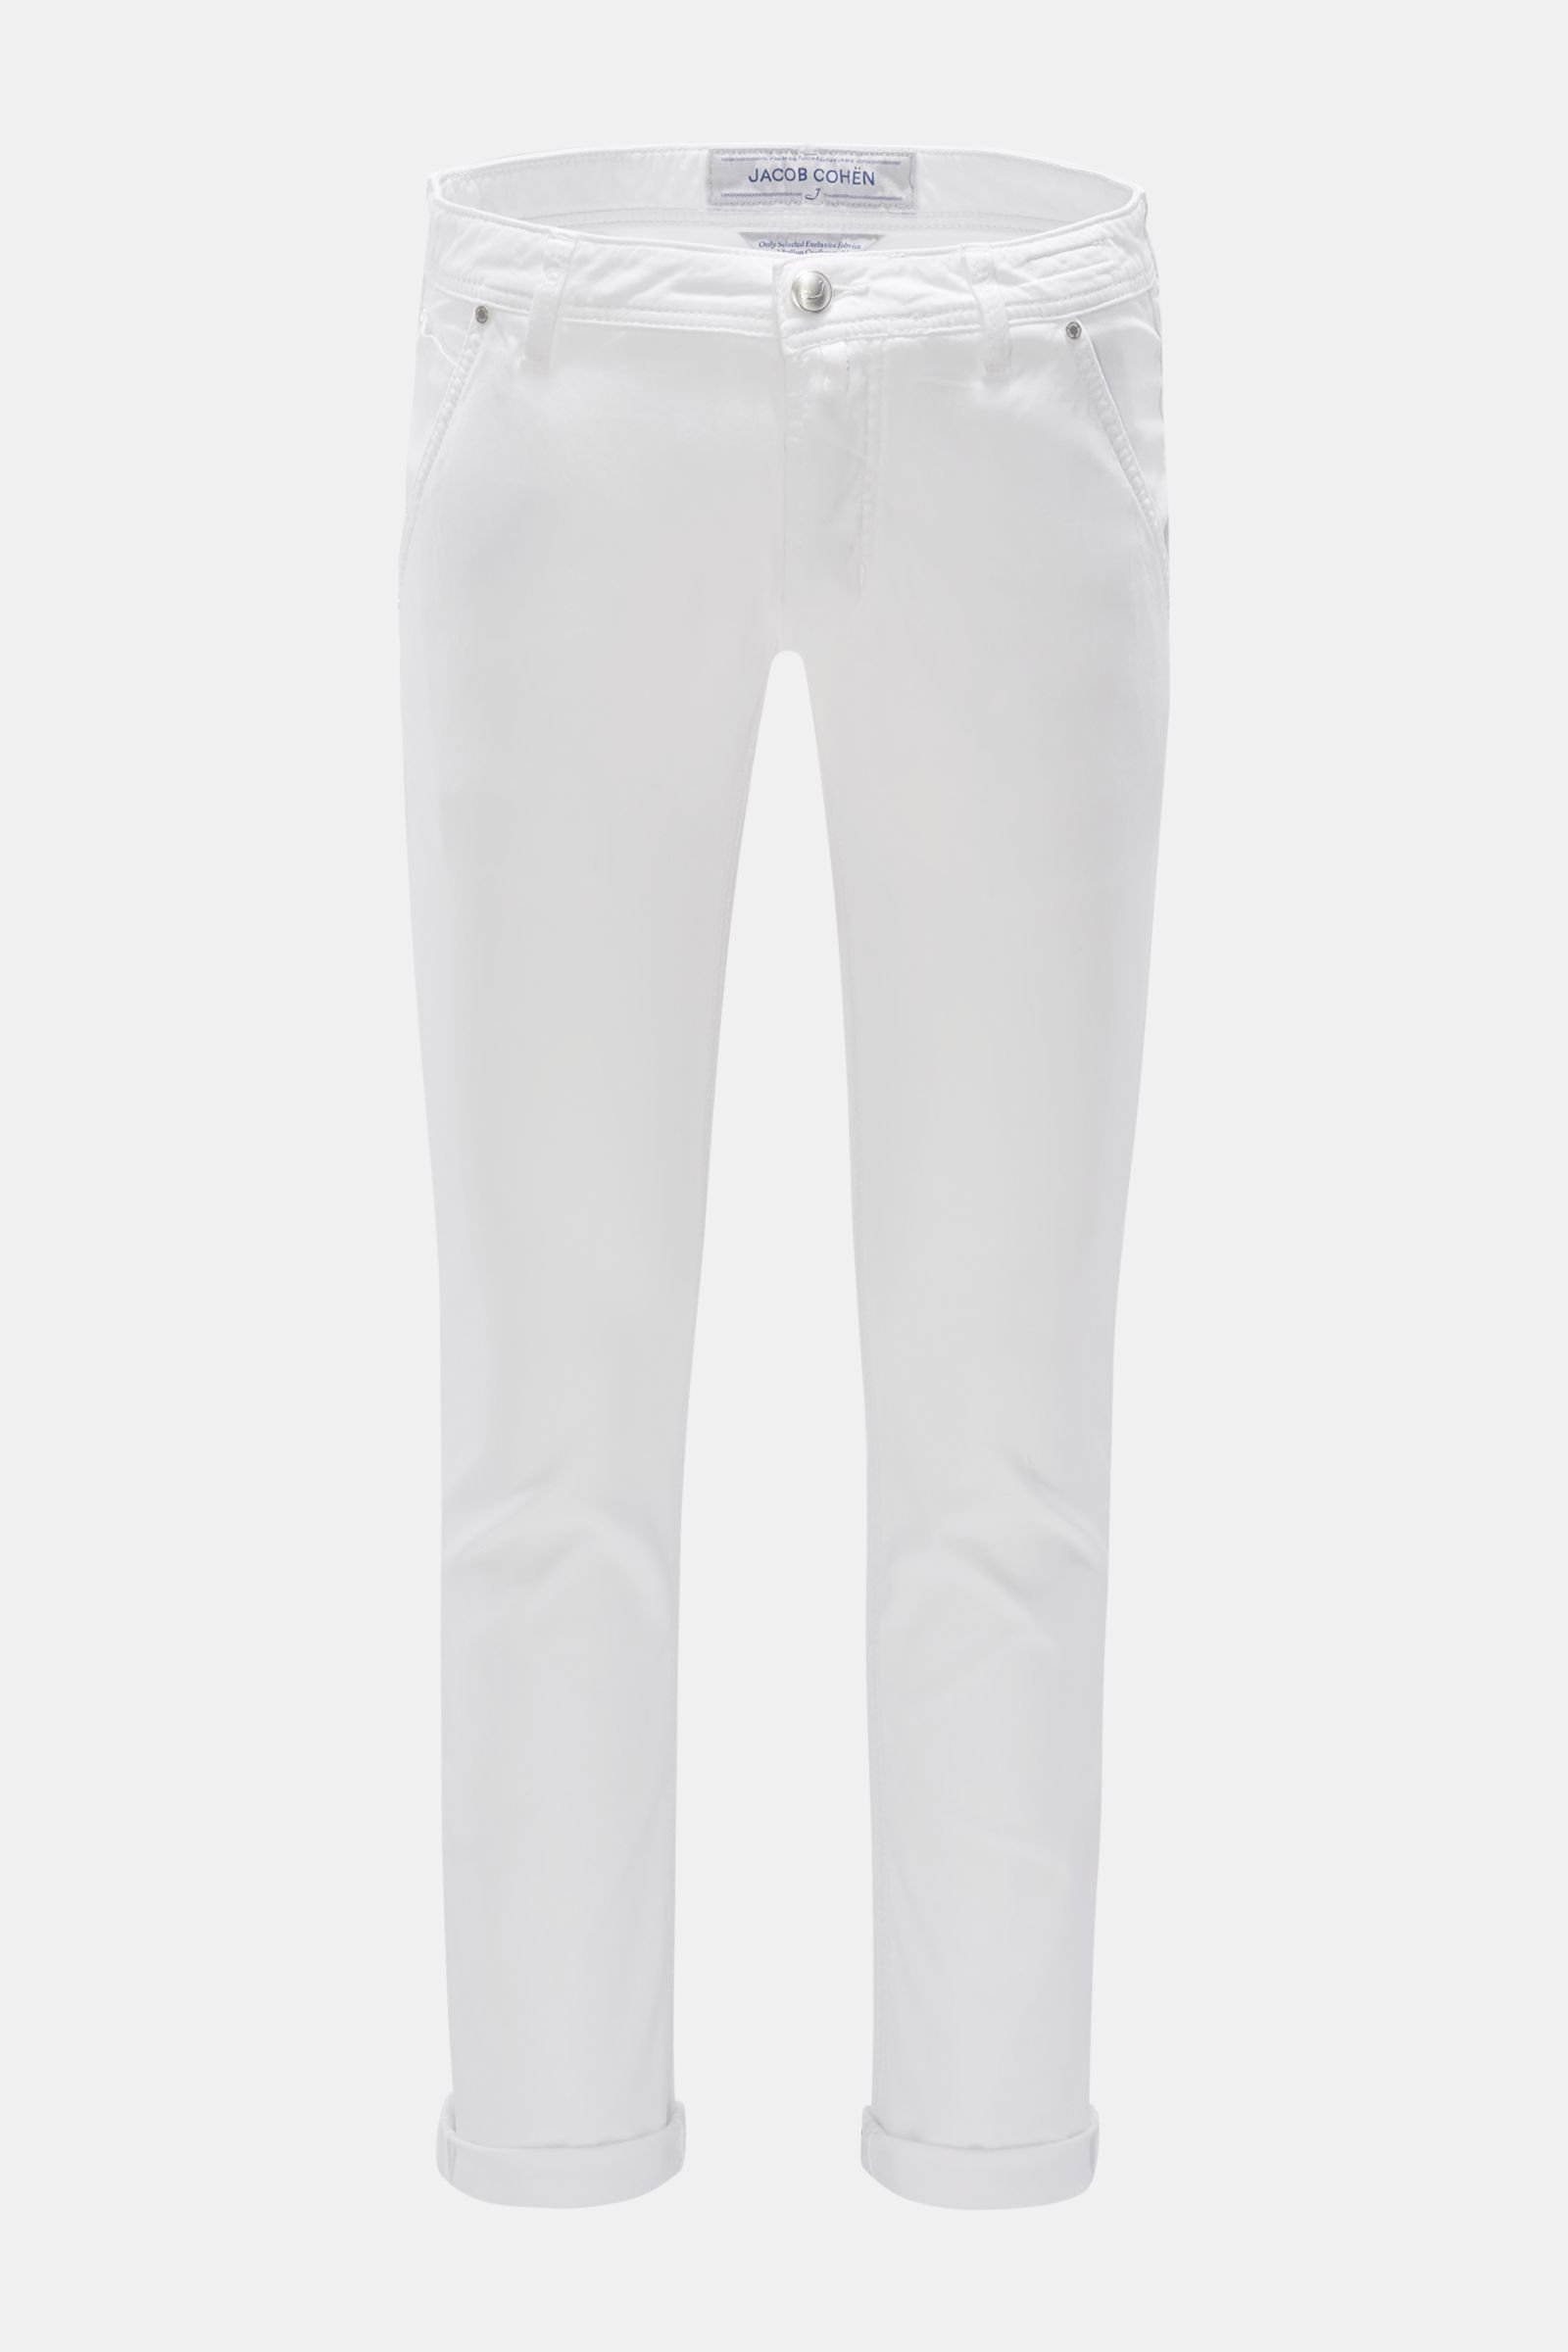 Cotton trousers 'J613 Comfort Slim Fit' white